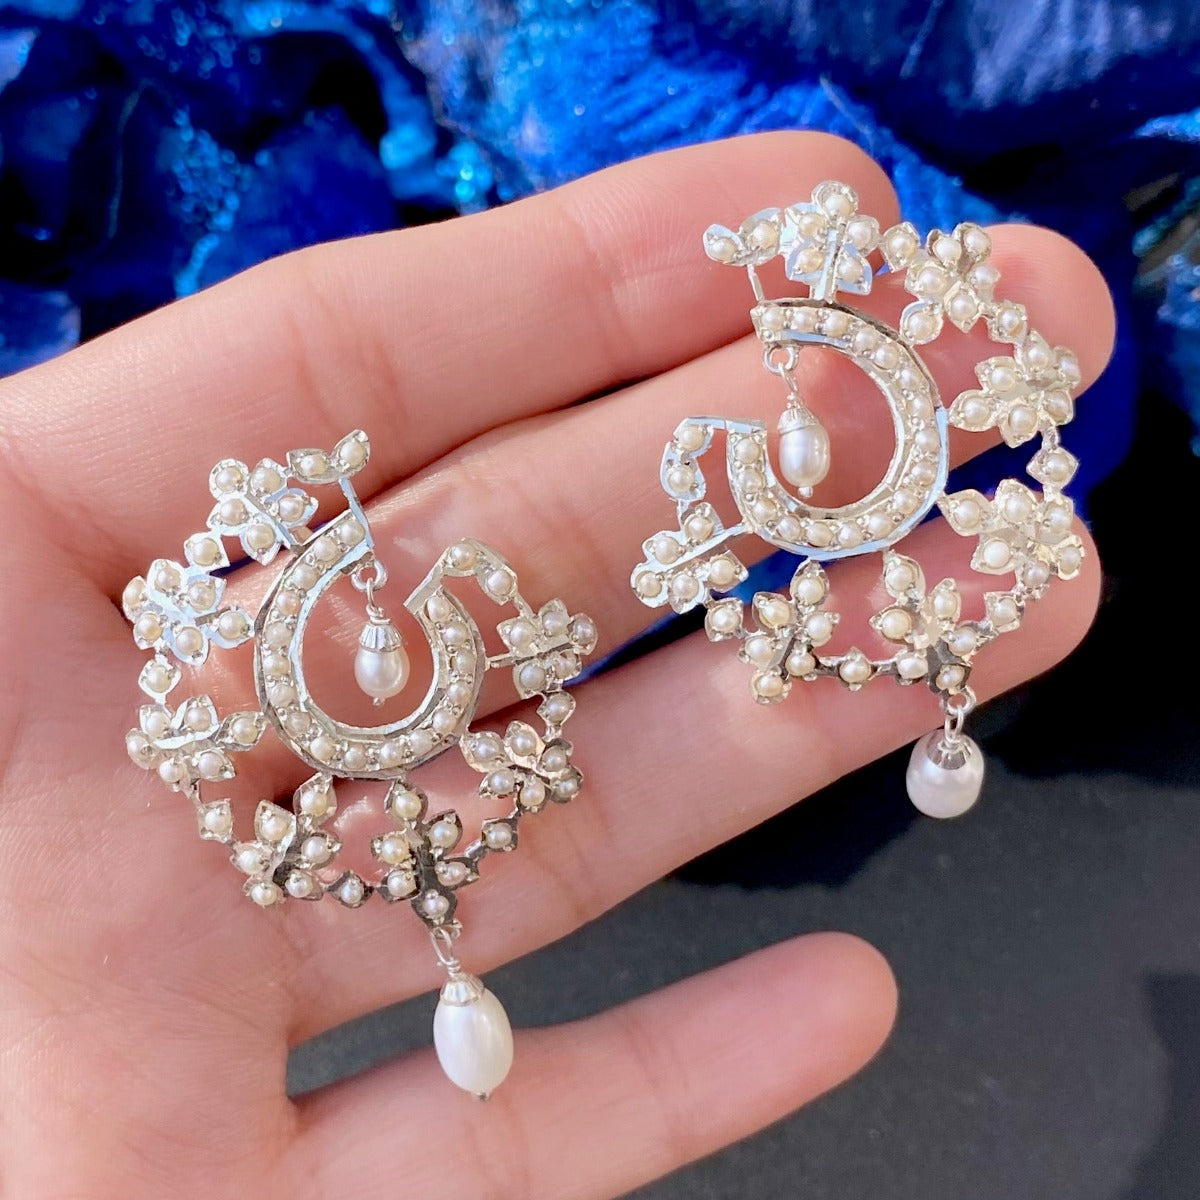 The Best Bridal Jewelry for Every Wedding Dress Neckline